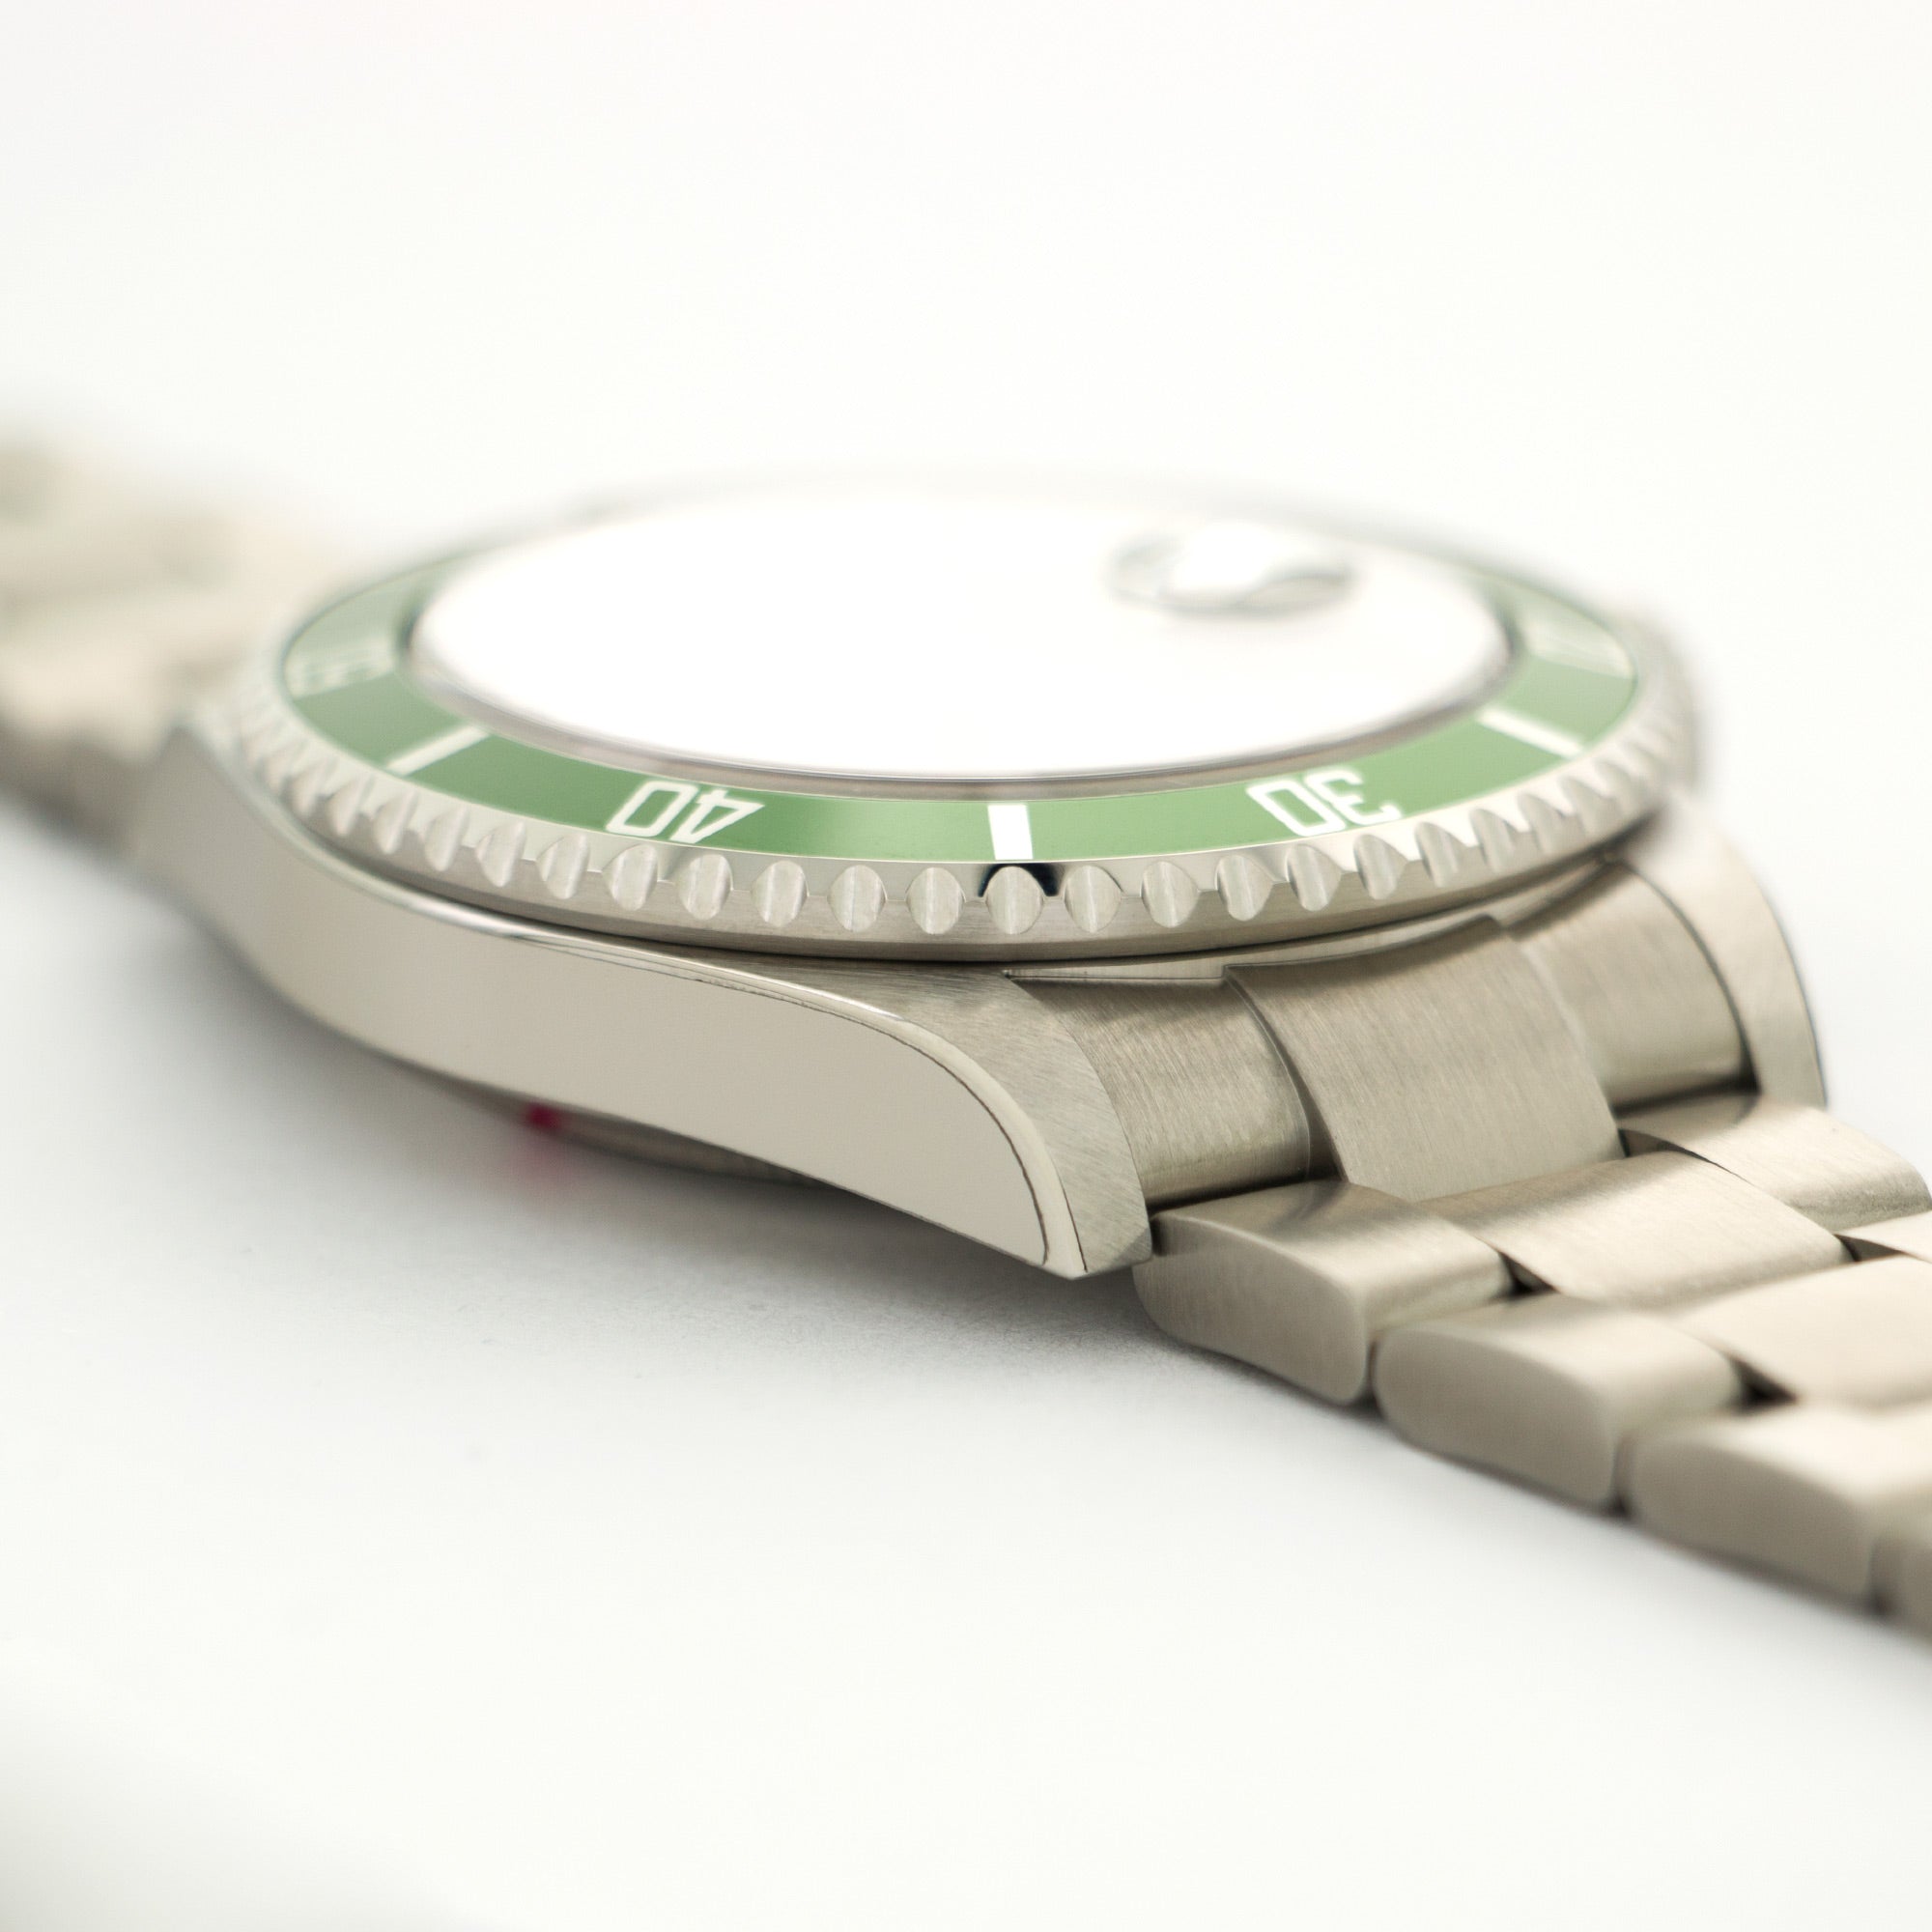 Rolex - New Old Stock Rolex Submariner Anniversary Watch Watch Ref. 16610 - The Keystone Watches